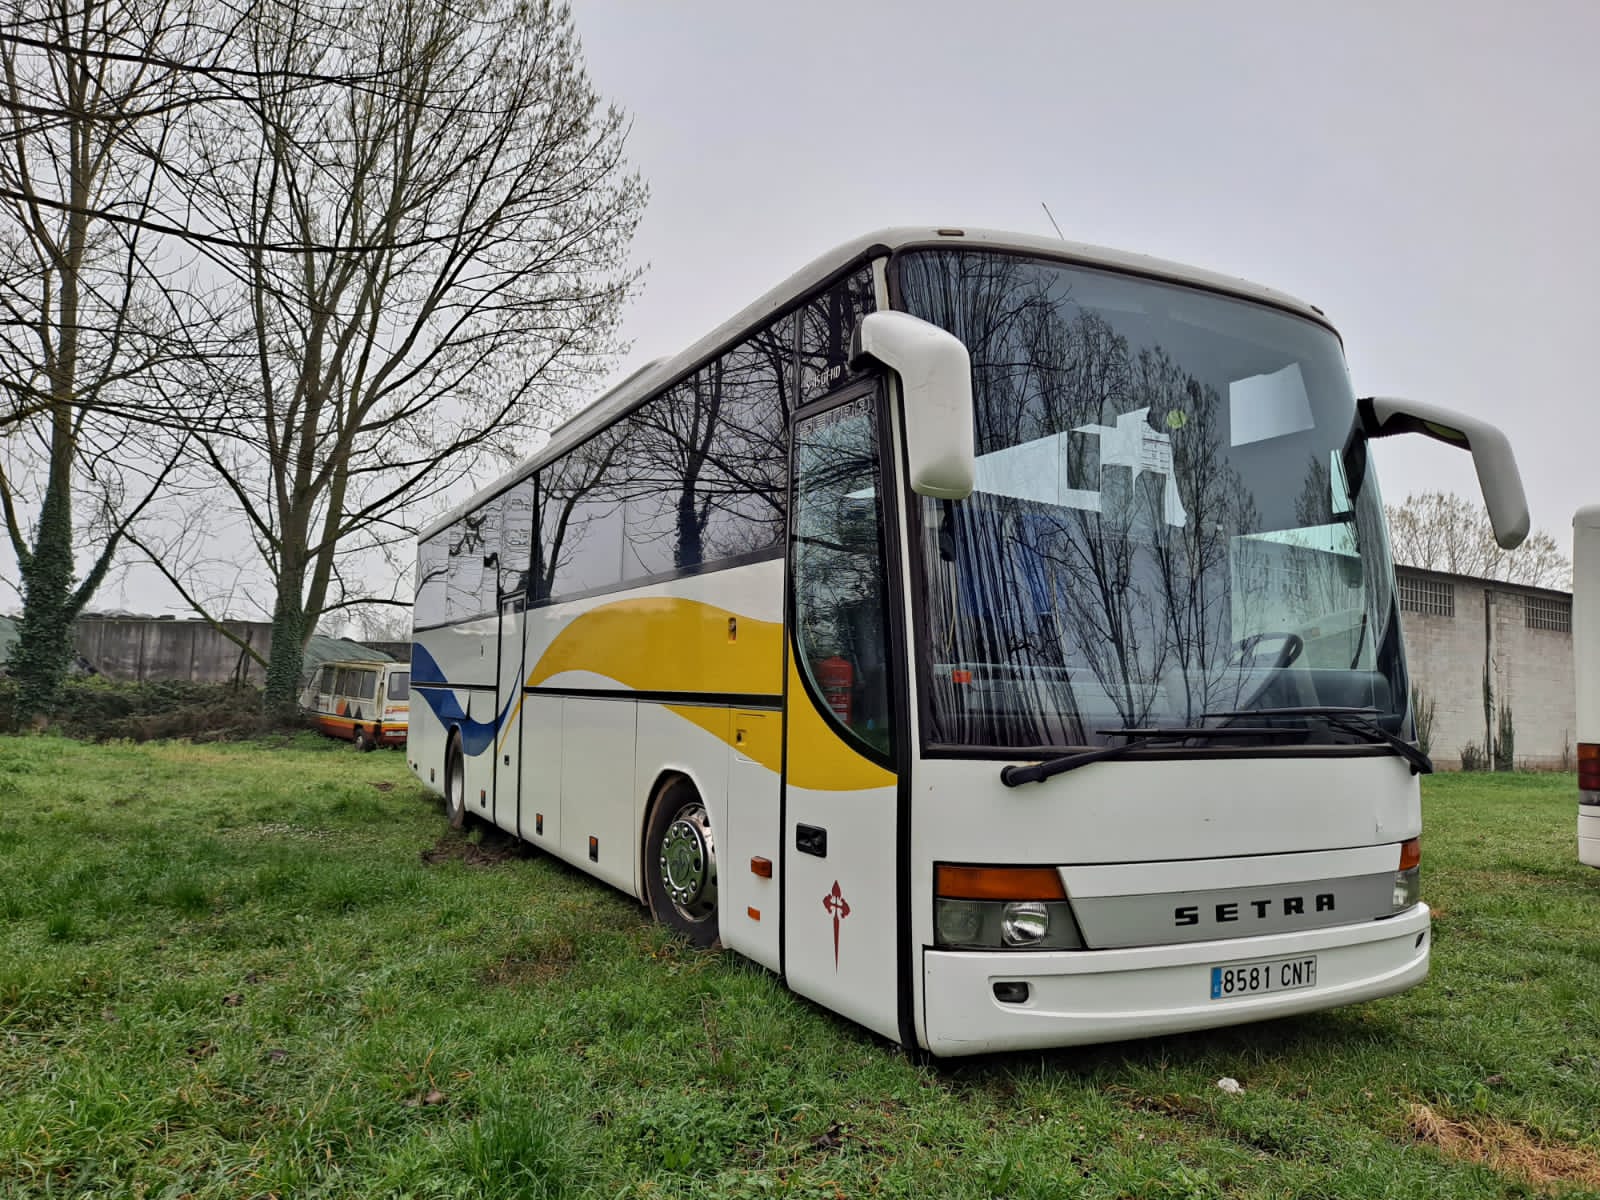 Setra Bus 